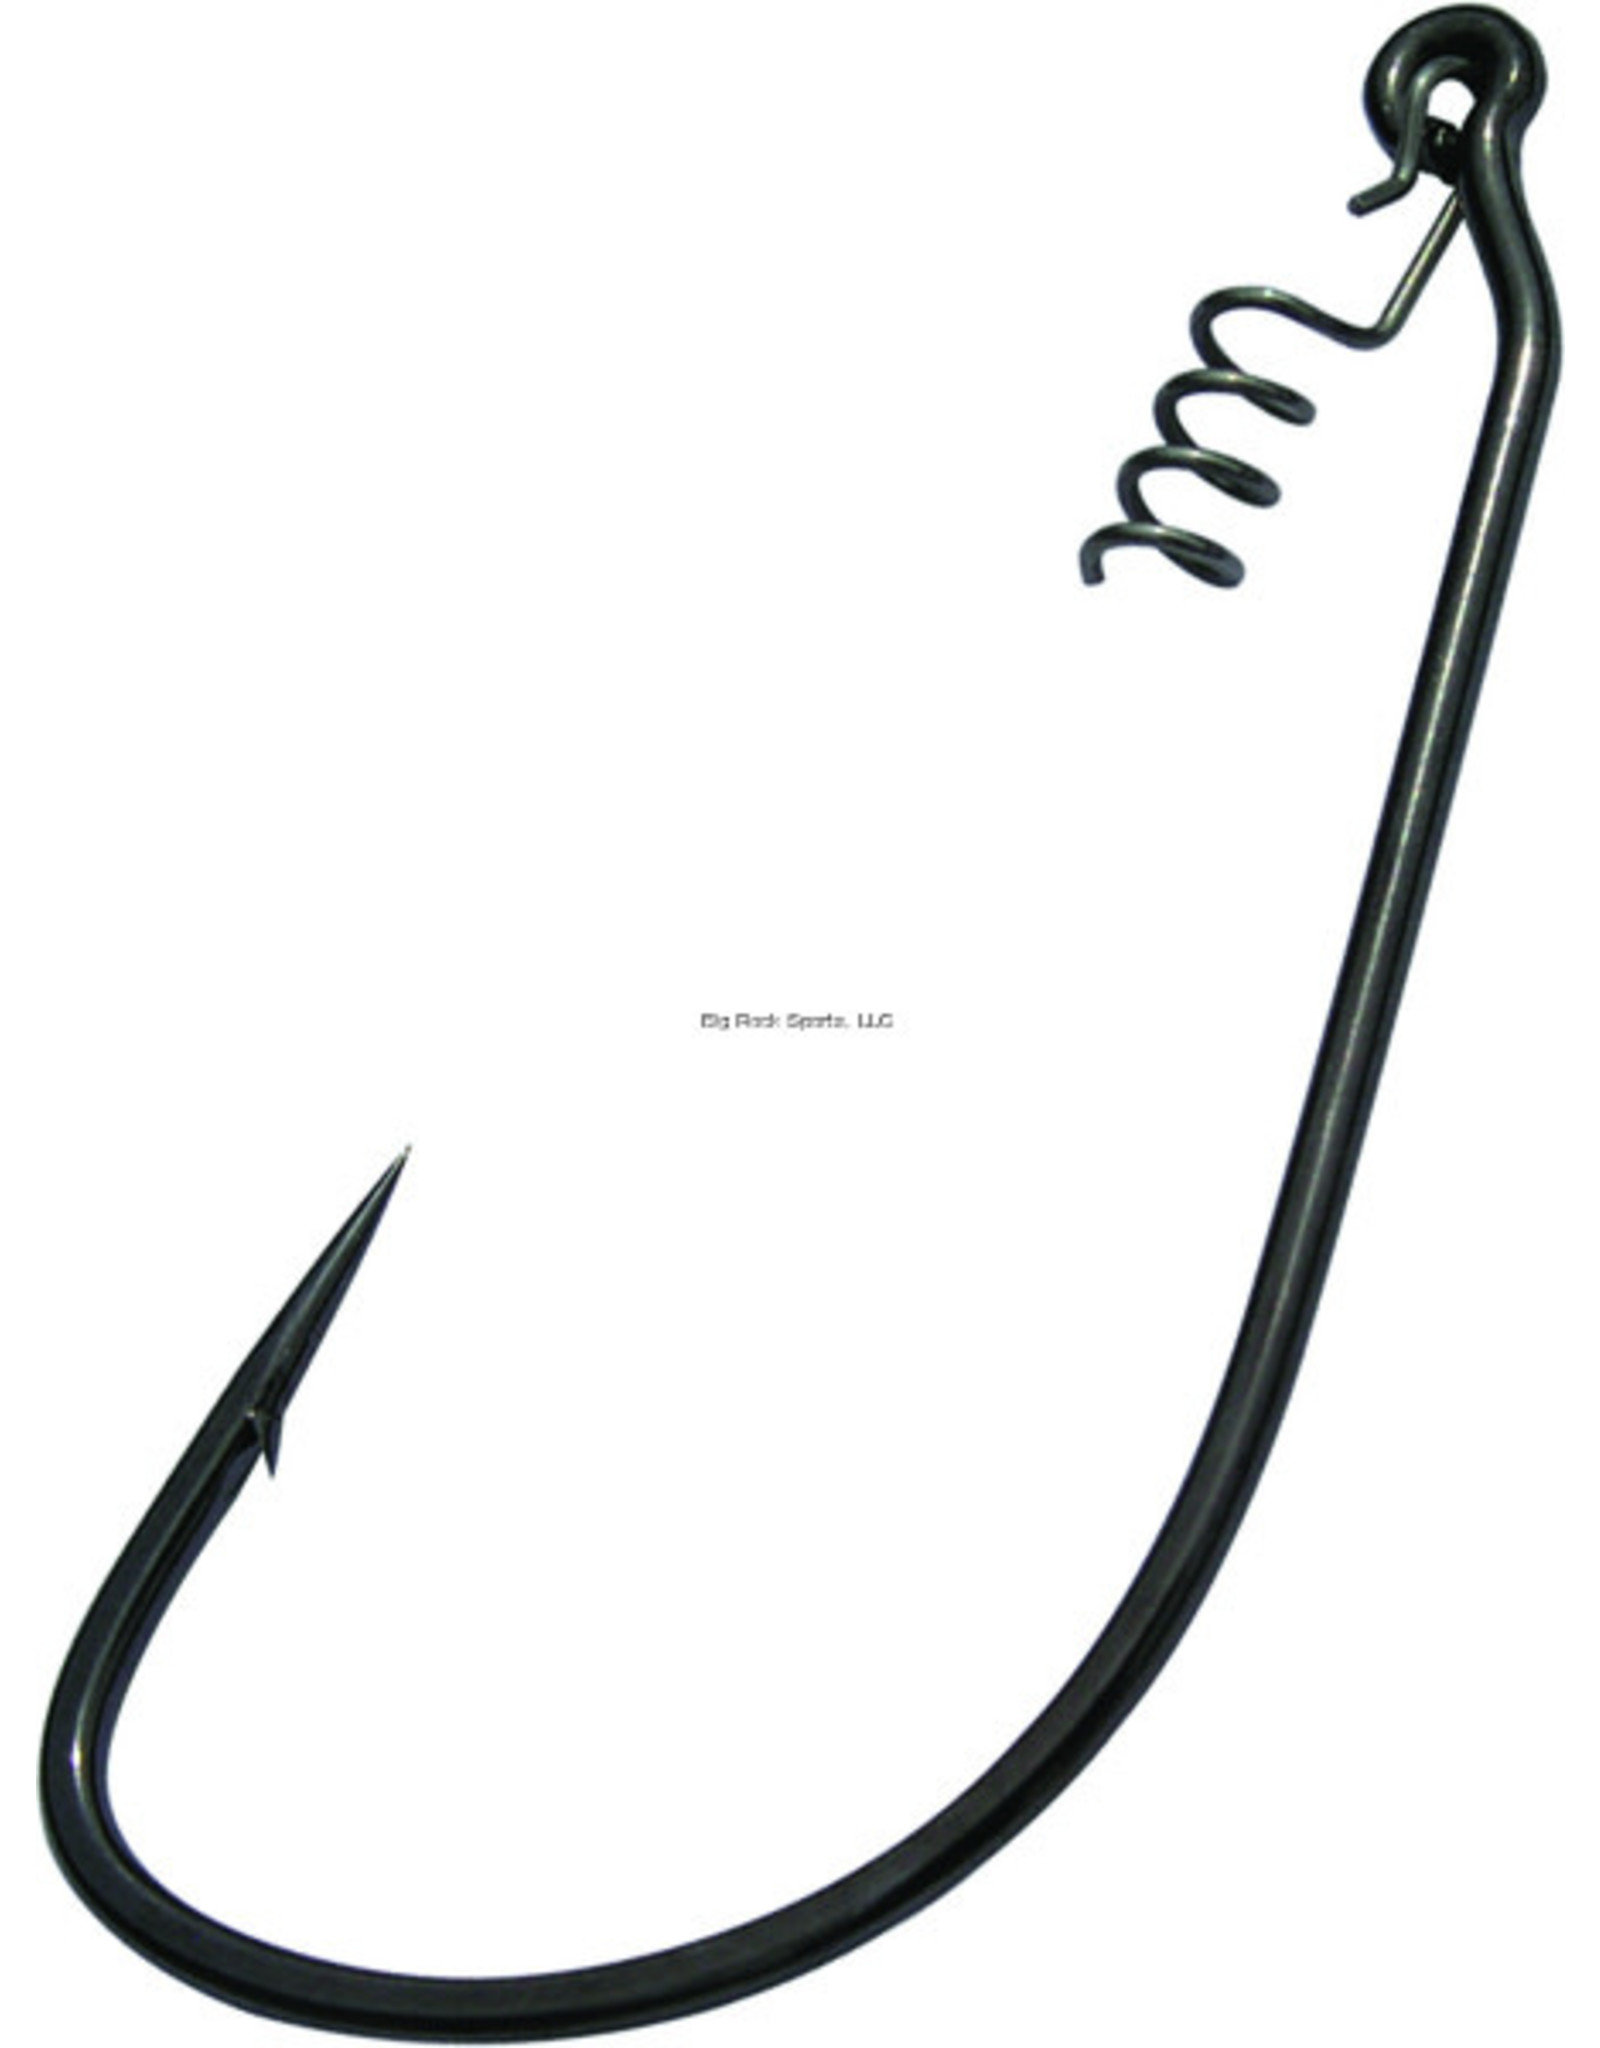 Gamakatsu Gamakatsu 296415 Superline Worm Hook with Spring Lock, Size 5/0, Needle Point, Extra Wide Gap, Ringed Eye, NS Black, 3 per Pack